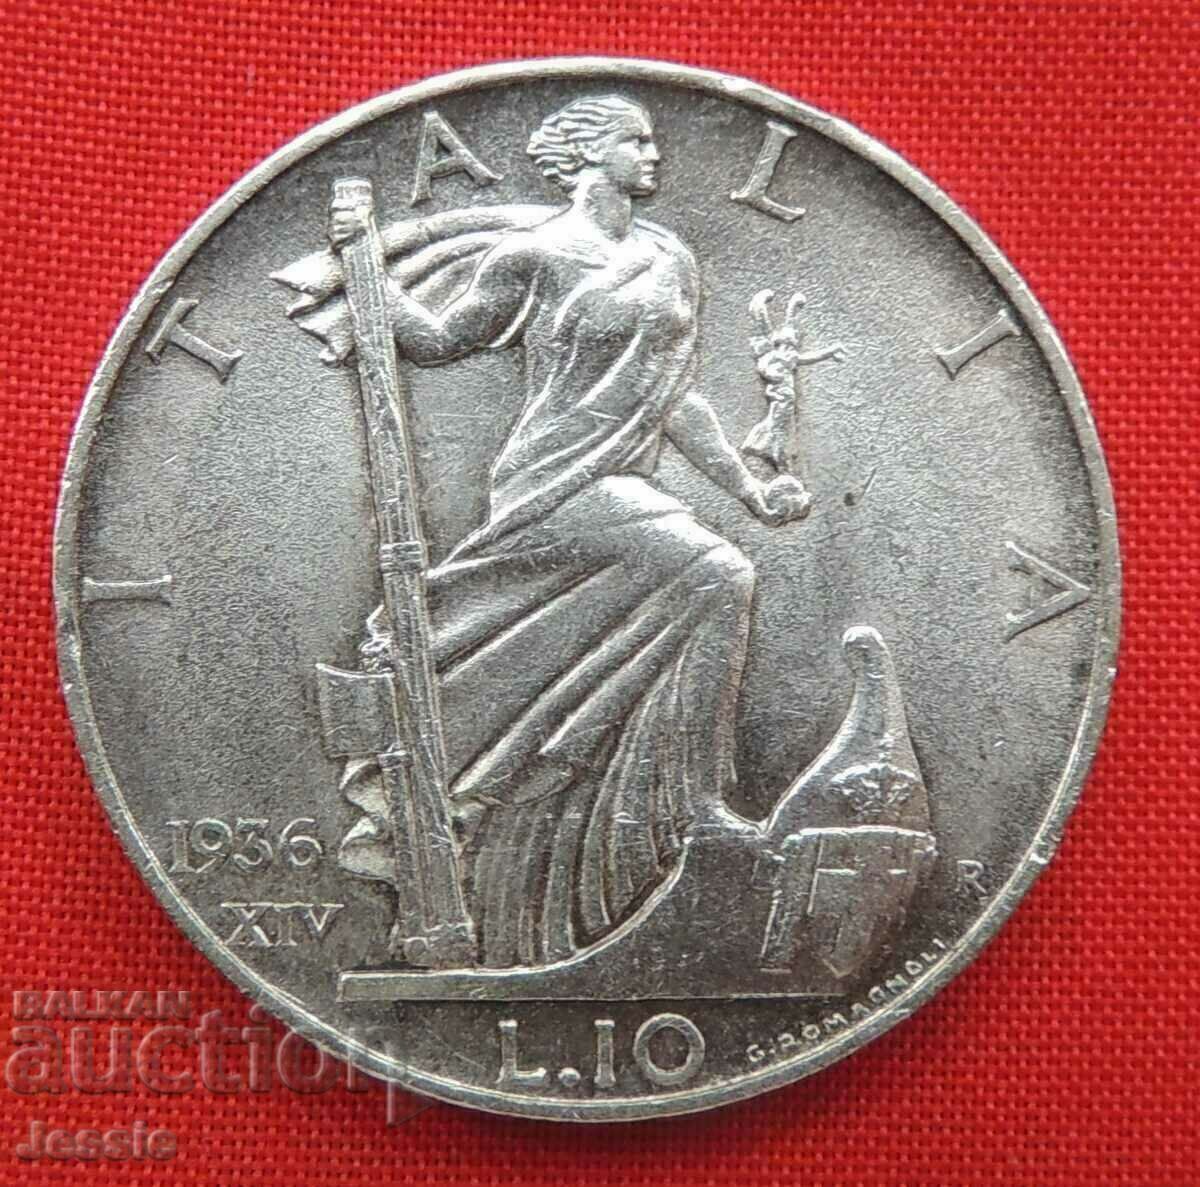 10 Lire 1936 Italia